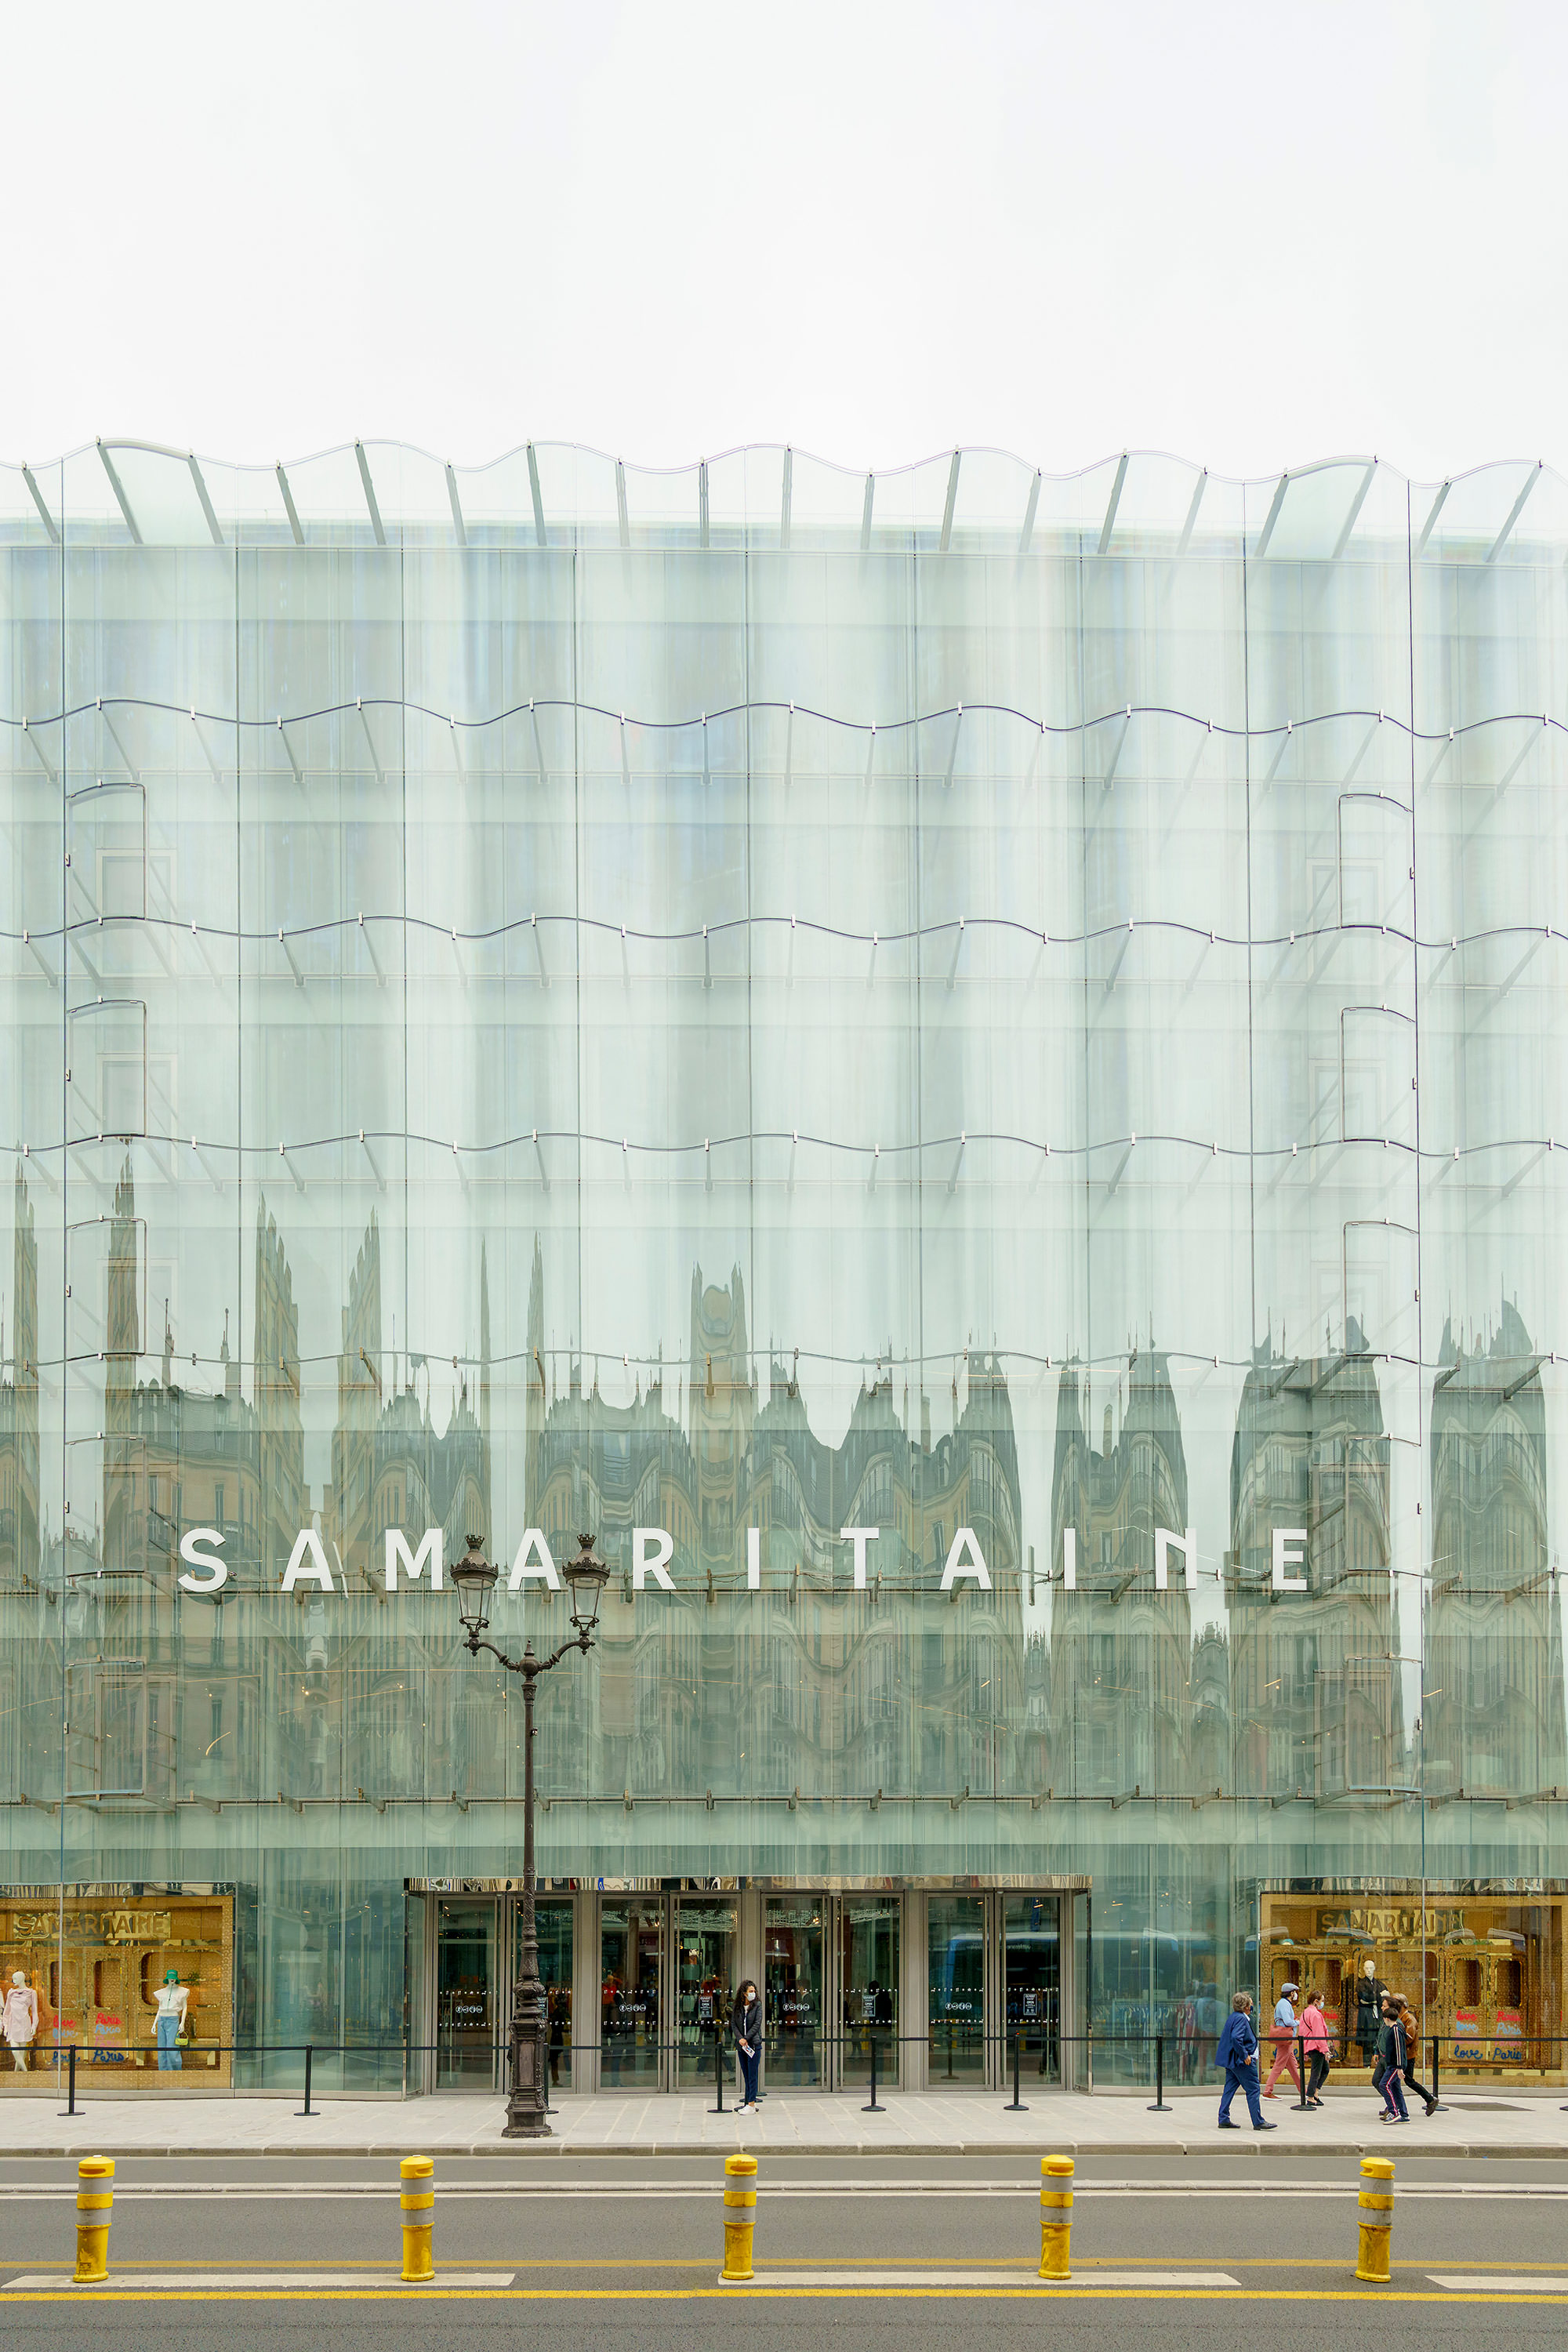 La Samaritaine in Paris - Still in fashion